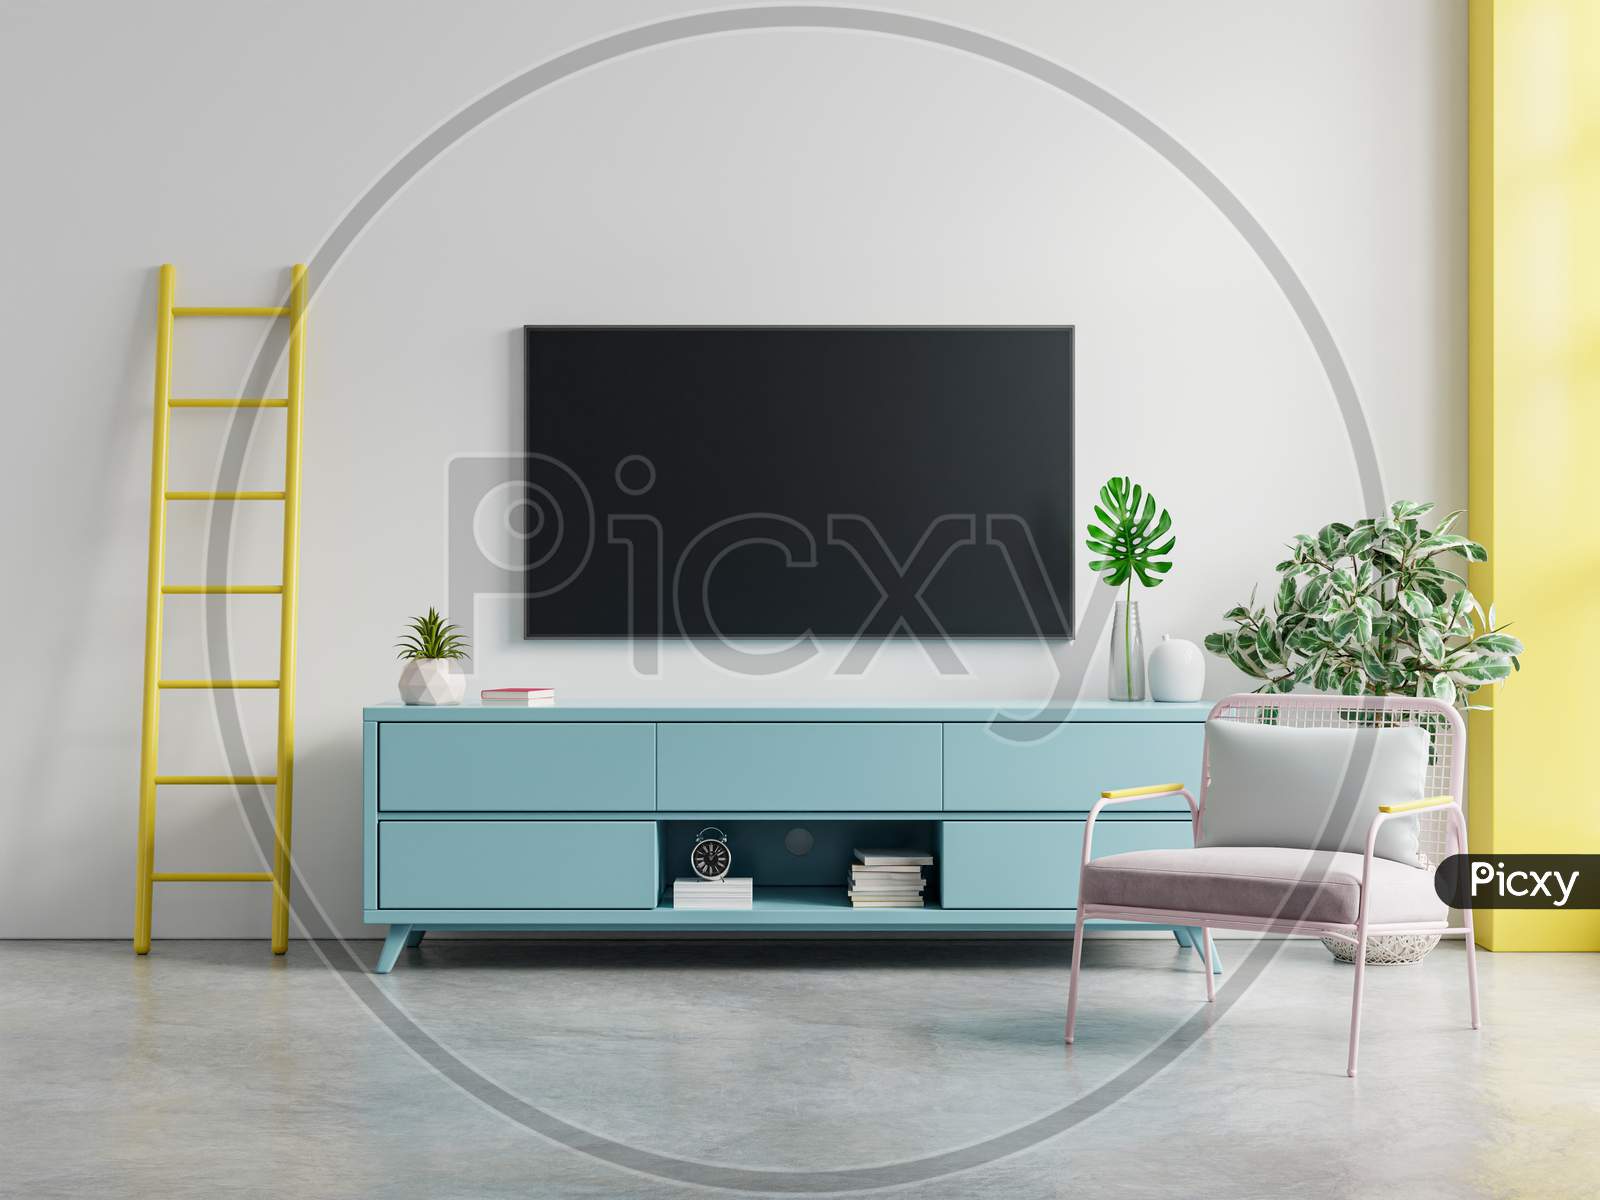 Tv On Cabinet Interior Wall Mockup In Modern Empty Room,Minimal Design.